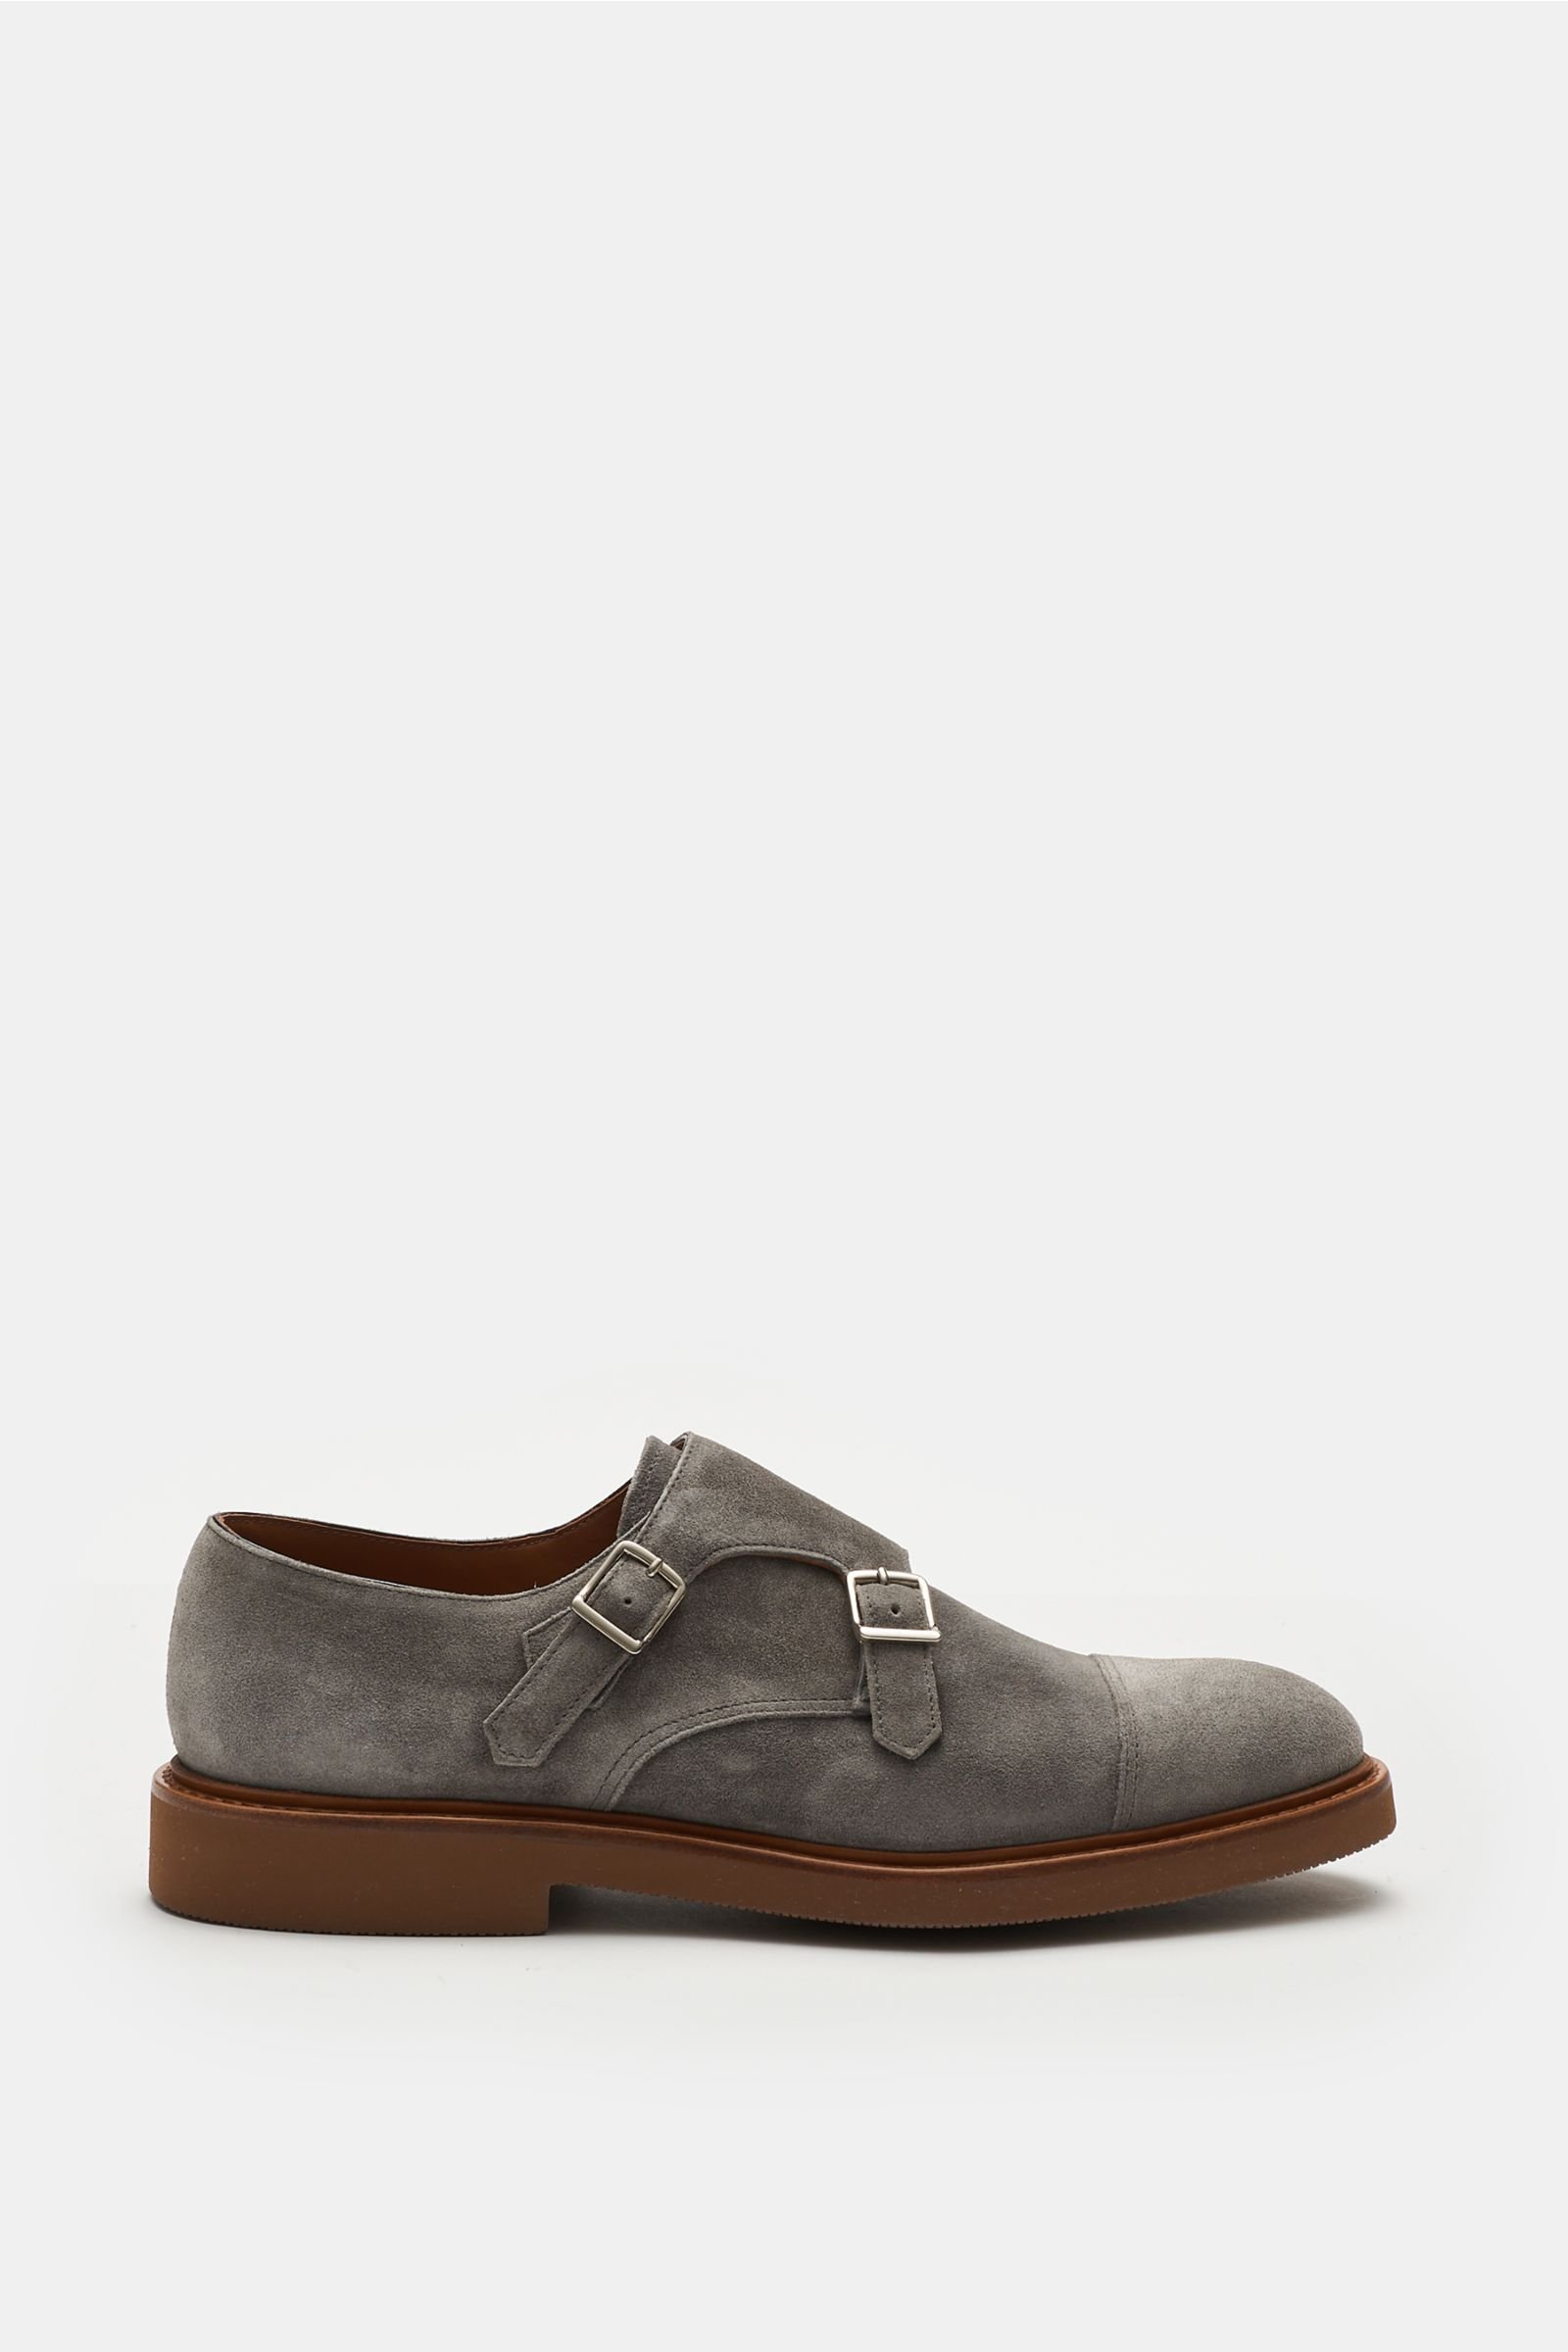 Double monk shoes 'Lambuy' grey